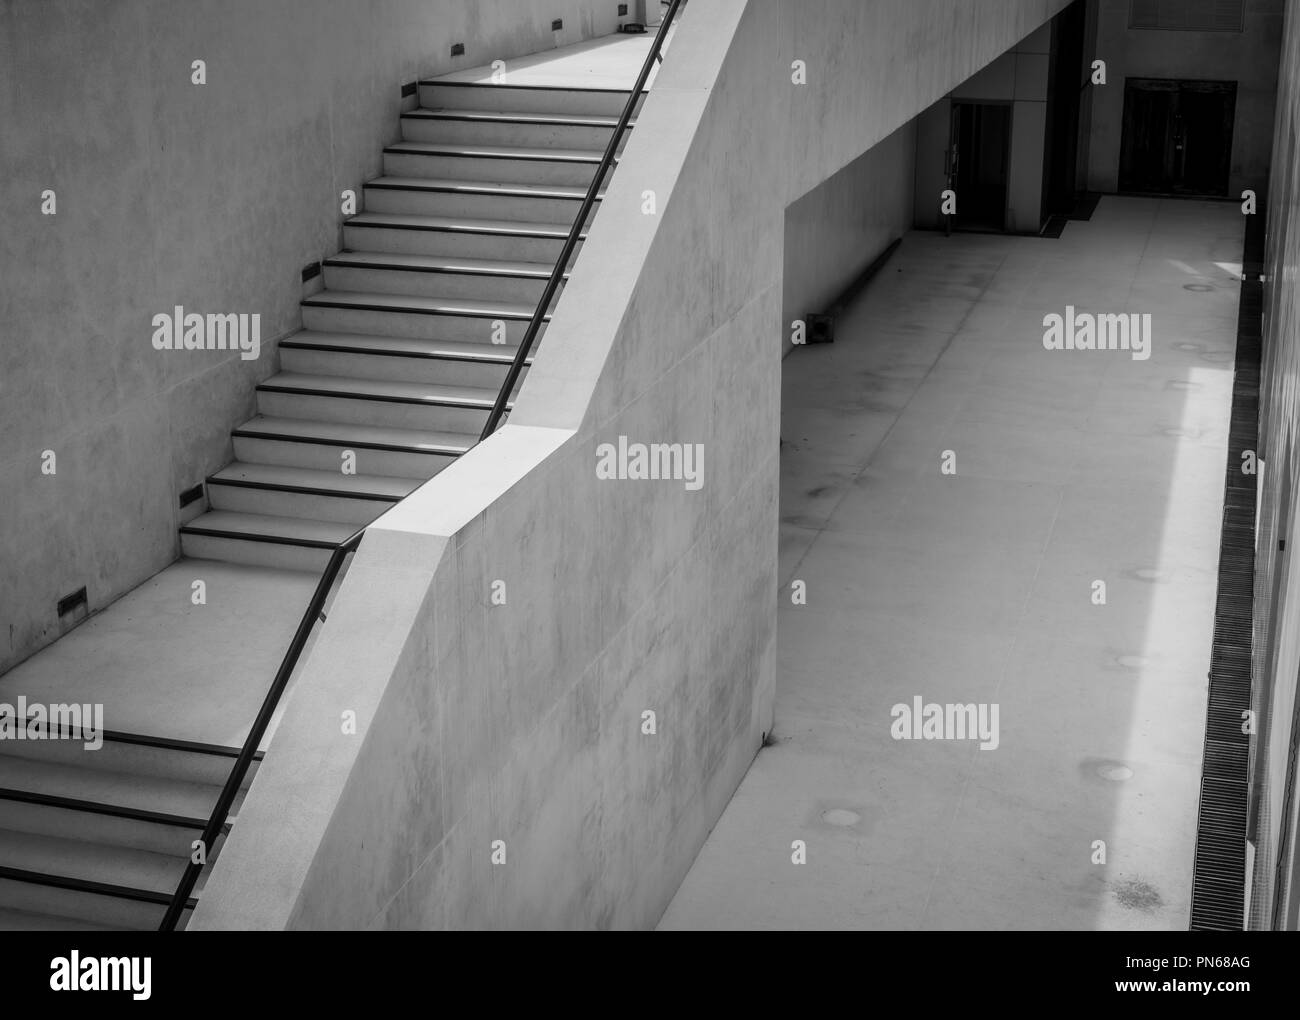 Contagioso Soportar exposición Escaleras de concreto fotografías e imágenes de alta resolución - Alamy